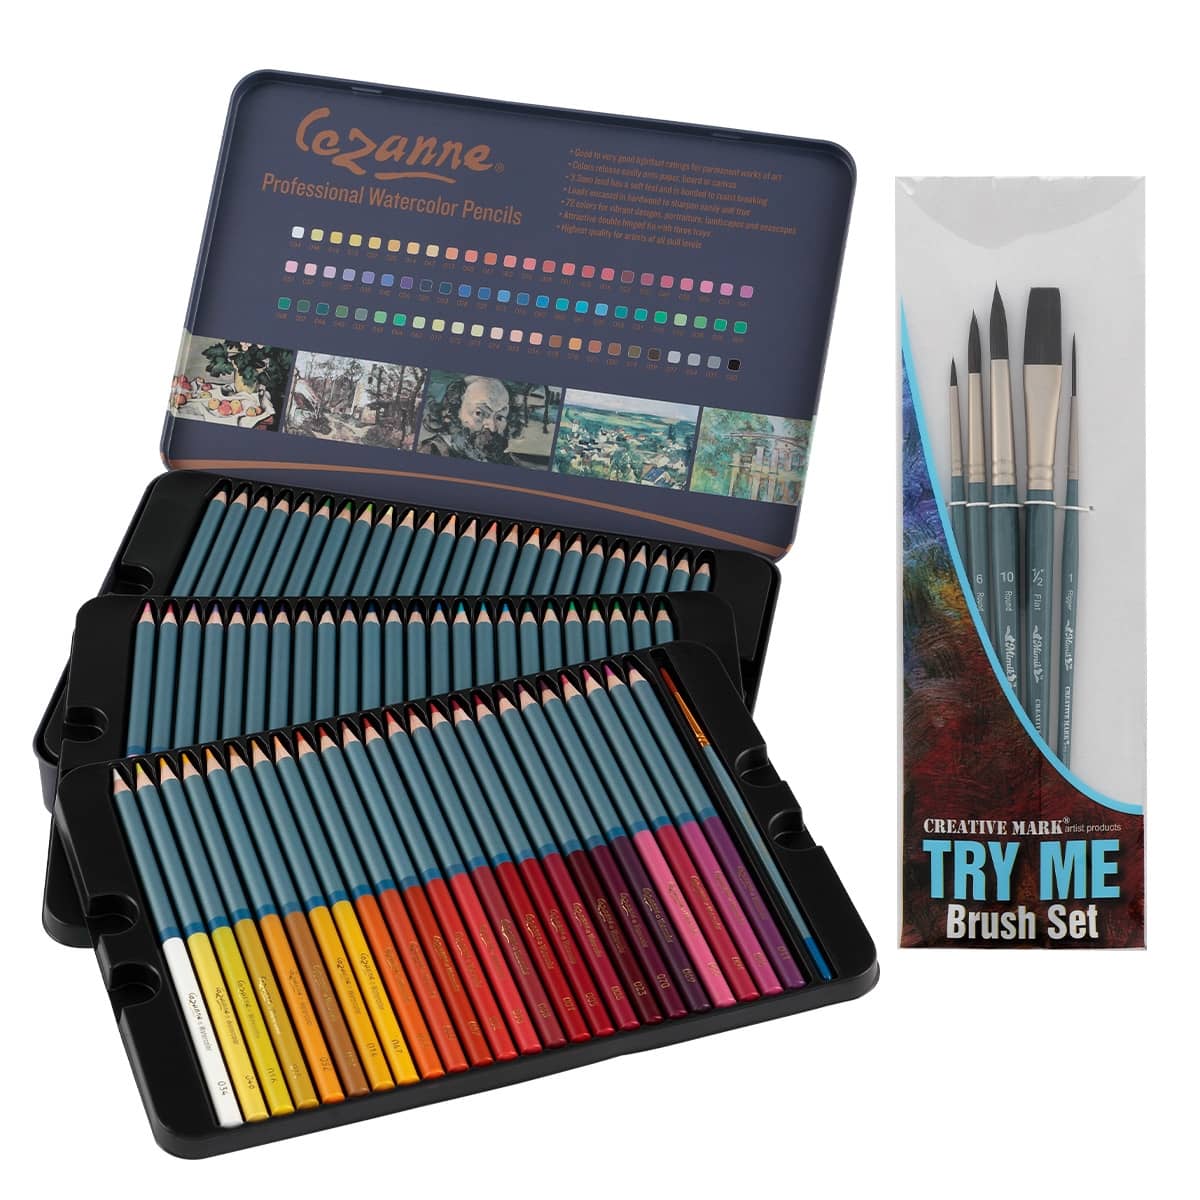 Cezanne Watercolor Pencils 72ct Set + Mimik Synthetic Squirrel 5pc Brush Combo